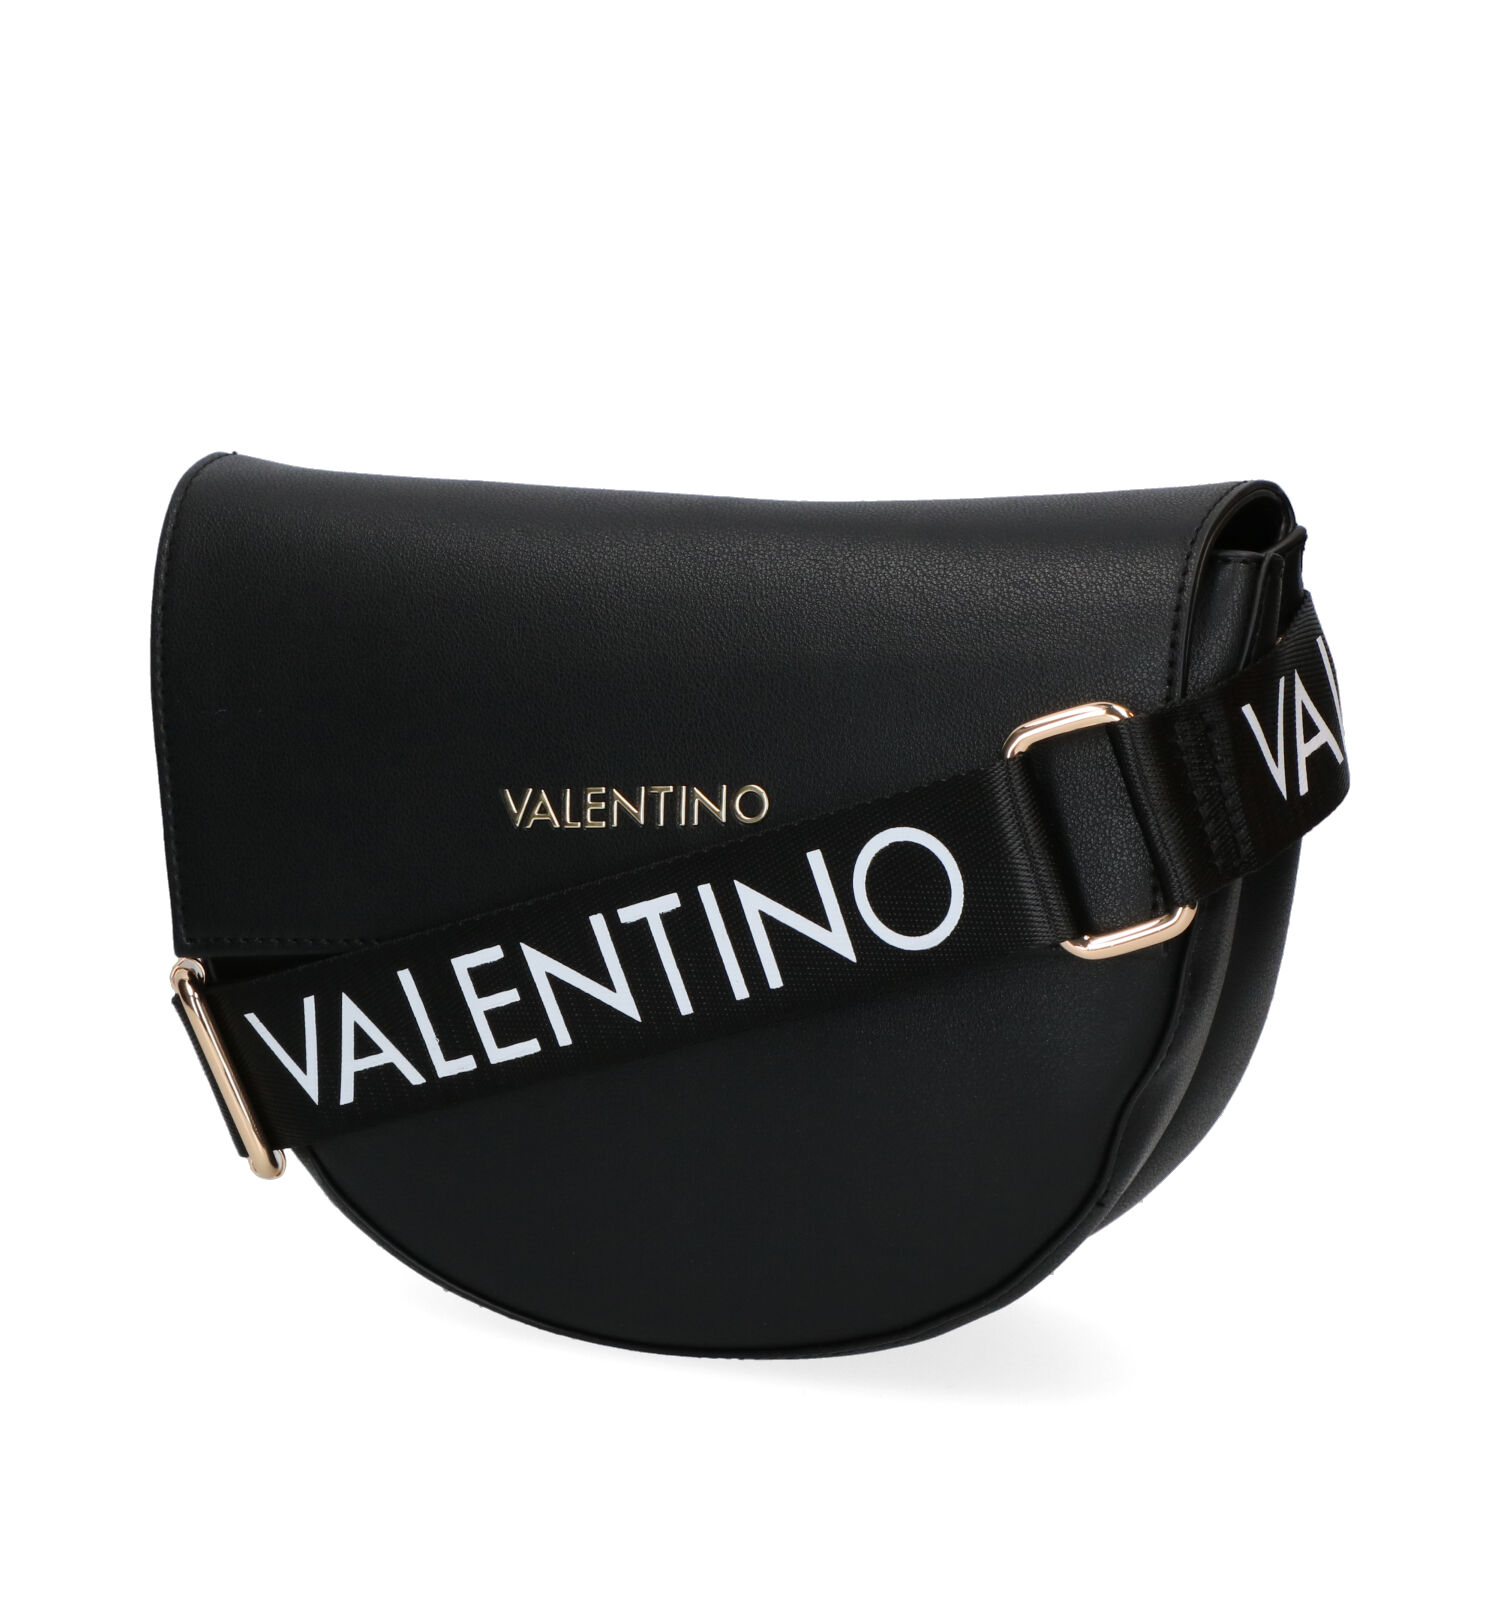 kromme onbekend Schandalig Valentino Handbags Bigs Zwarte Crossbody Tas | Dames Crossbody tassen